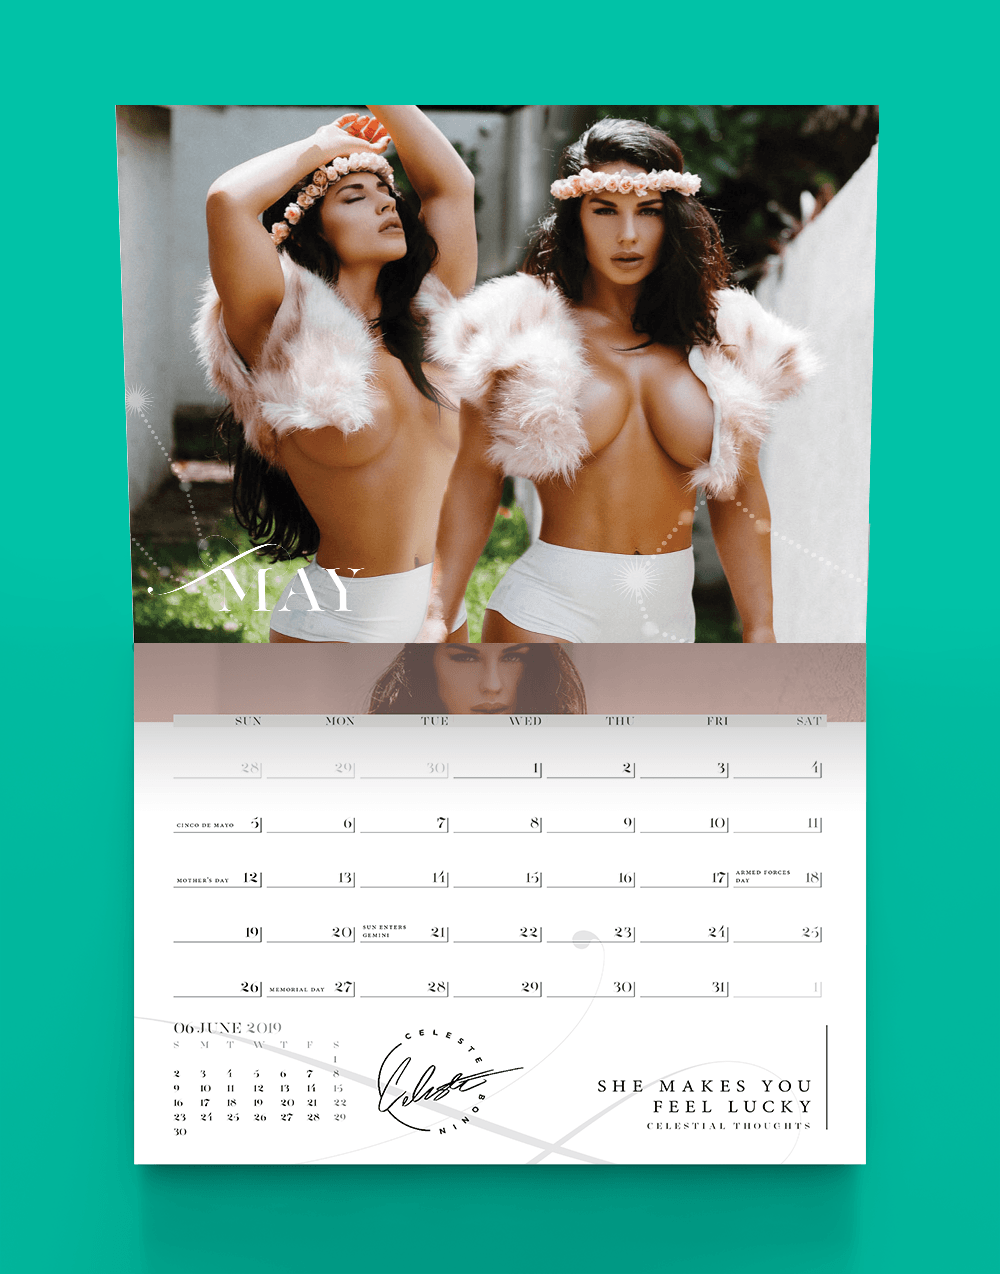 Erotic 2010 calendar